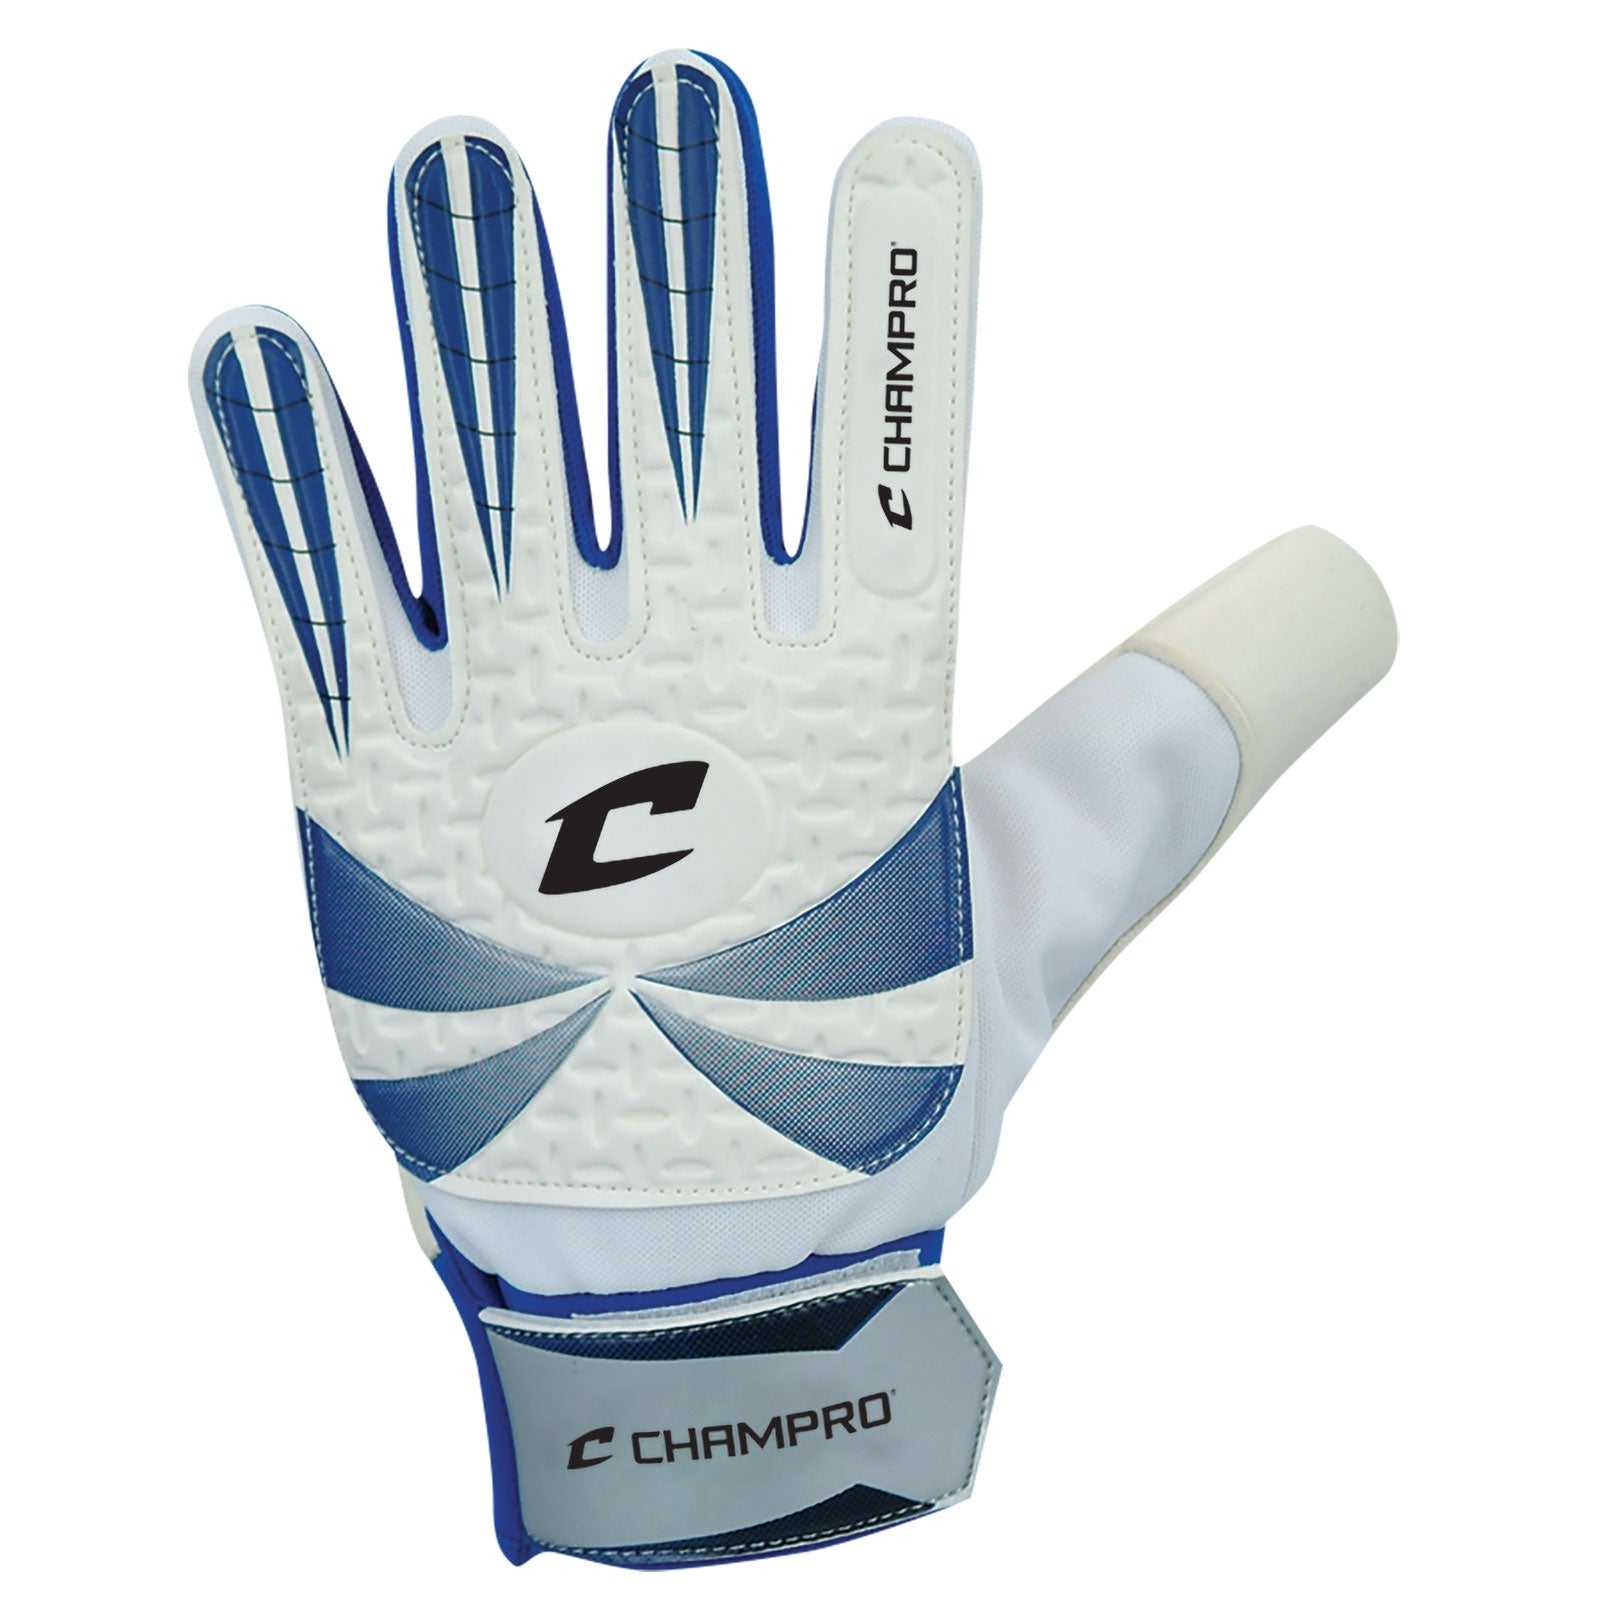 Champro SG3 Goalie Gloves - HIT a Double